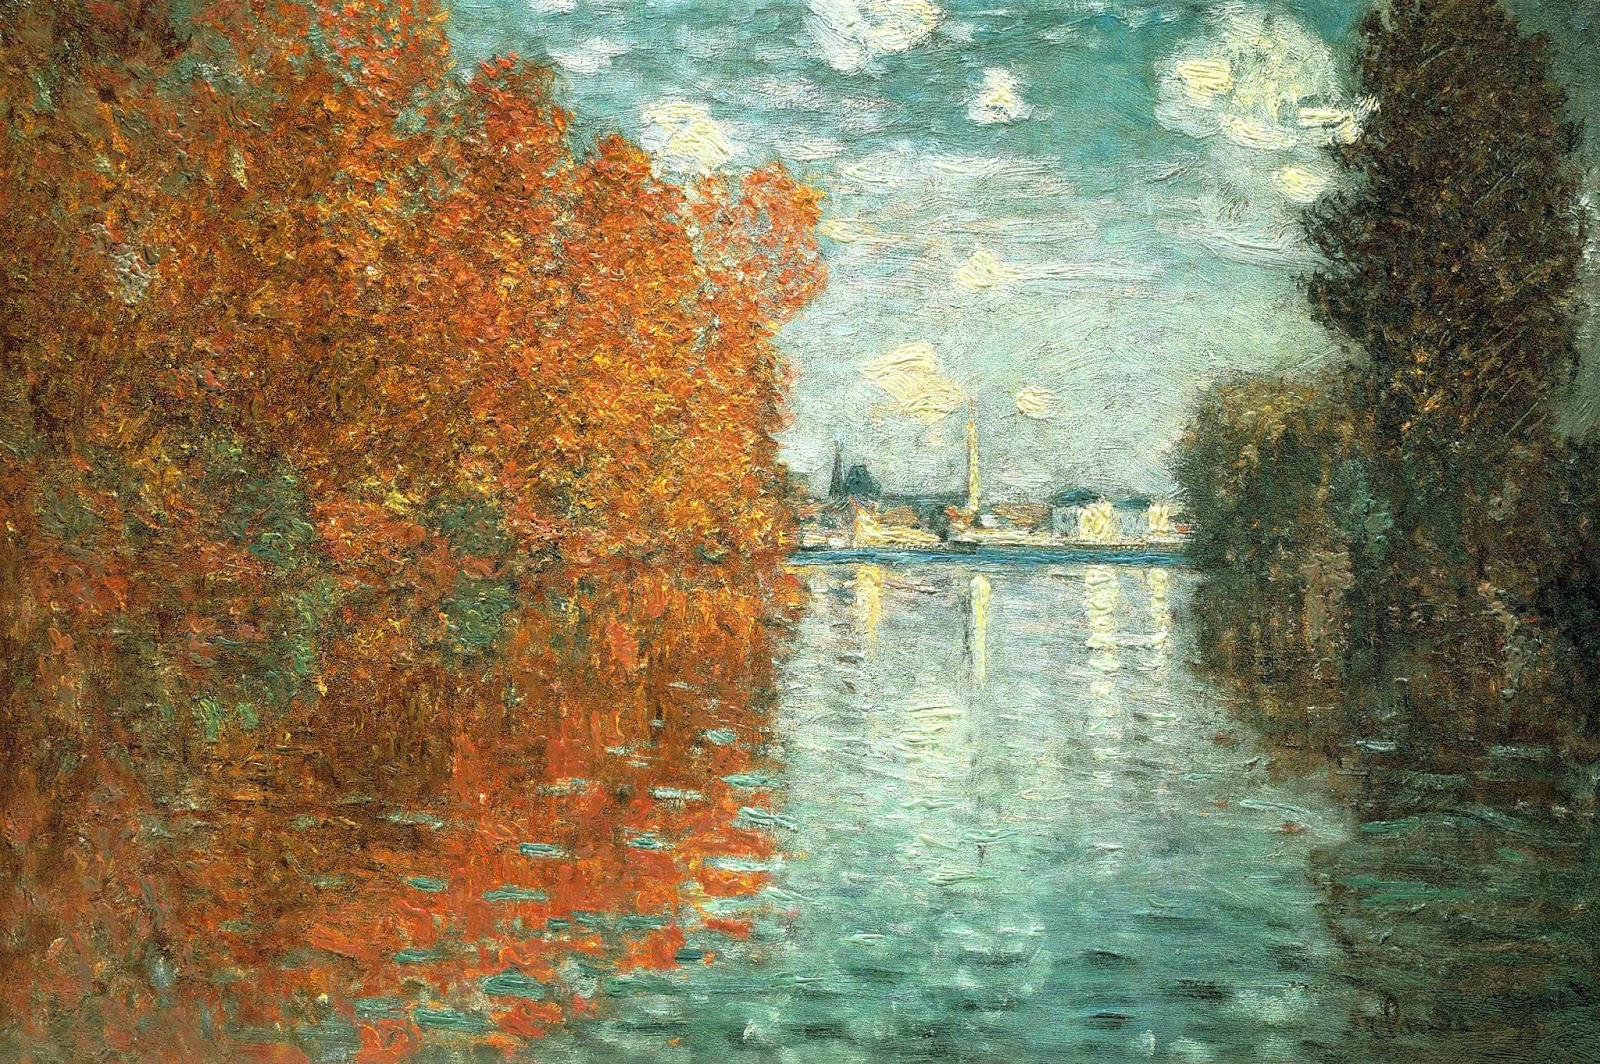 Claude+Monet-1840-1926 (123).jpg